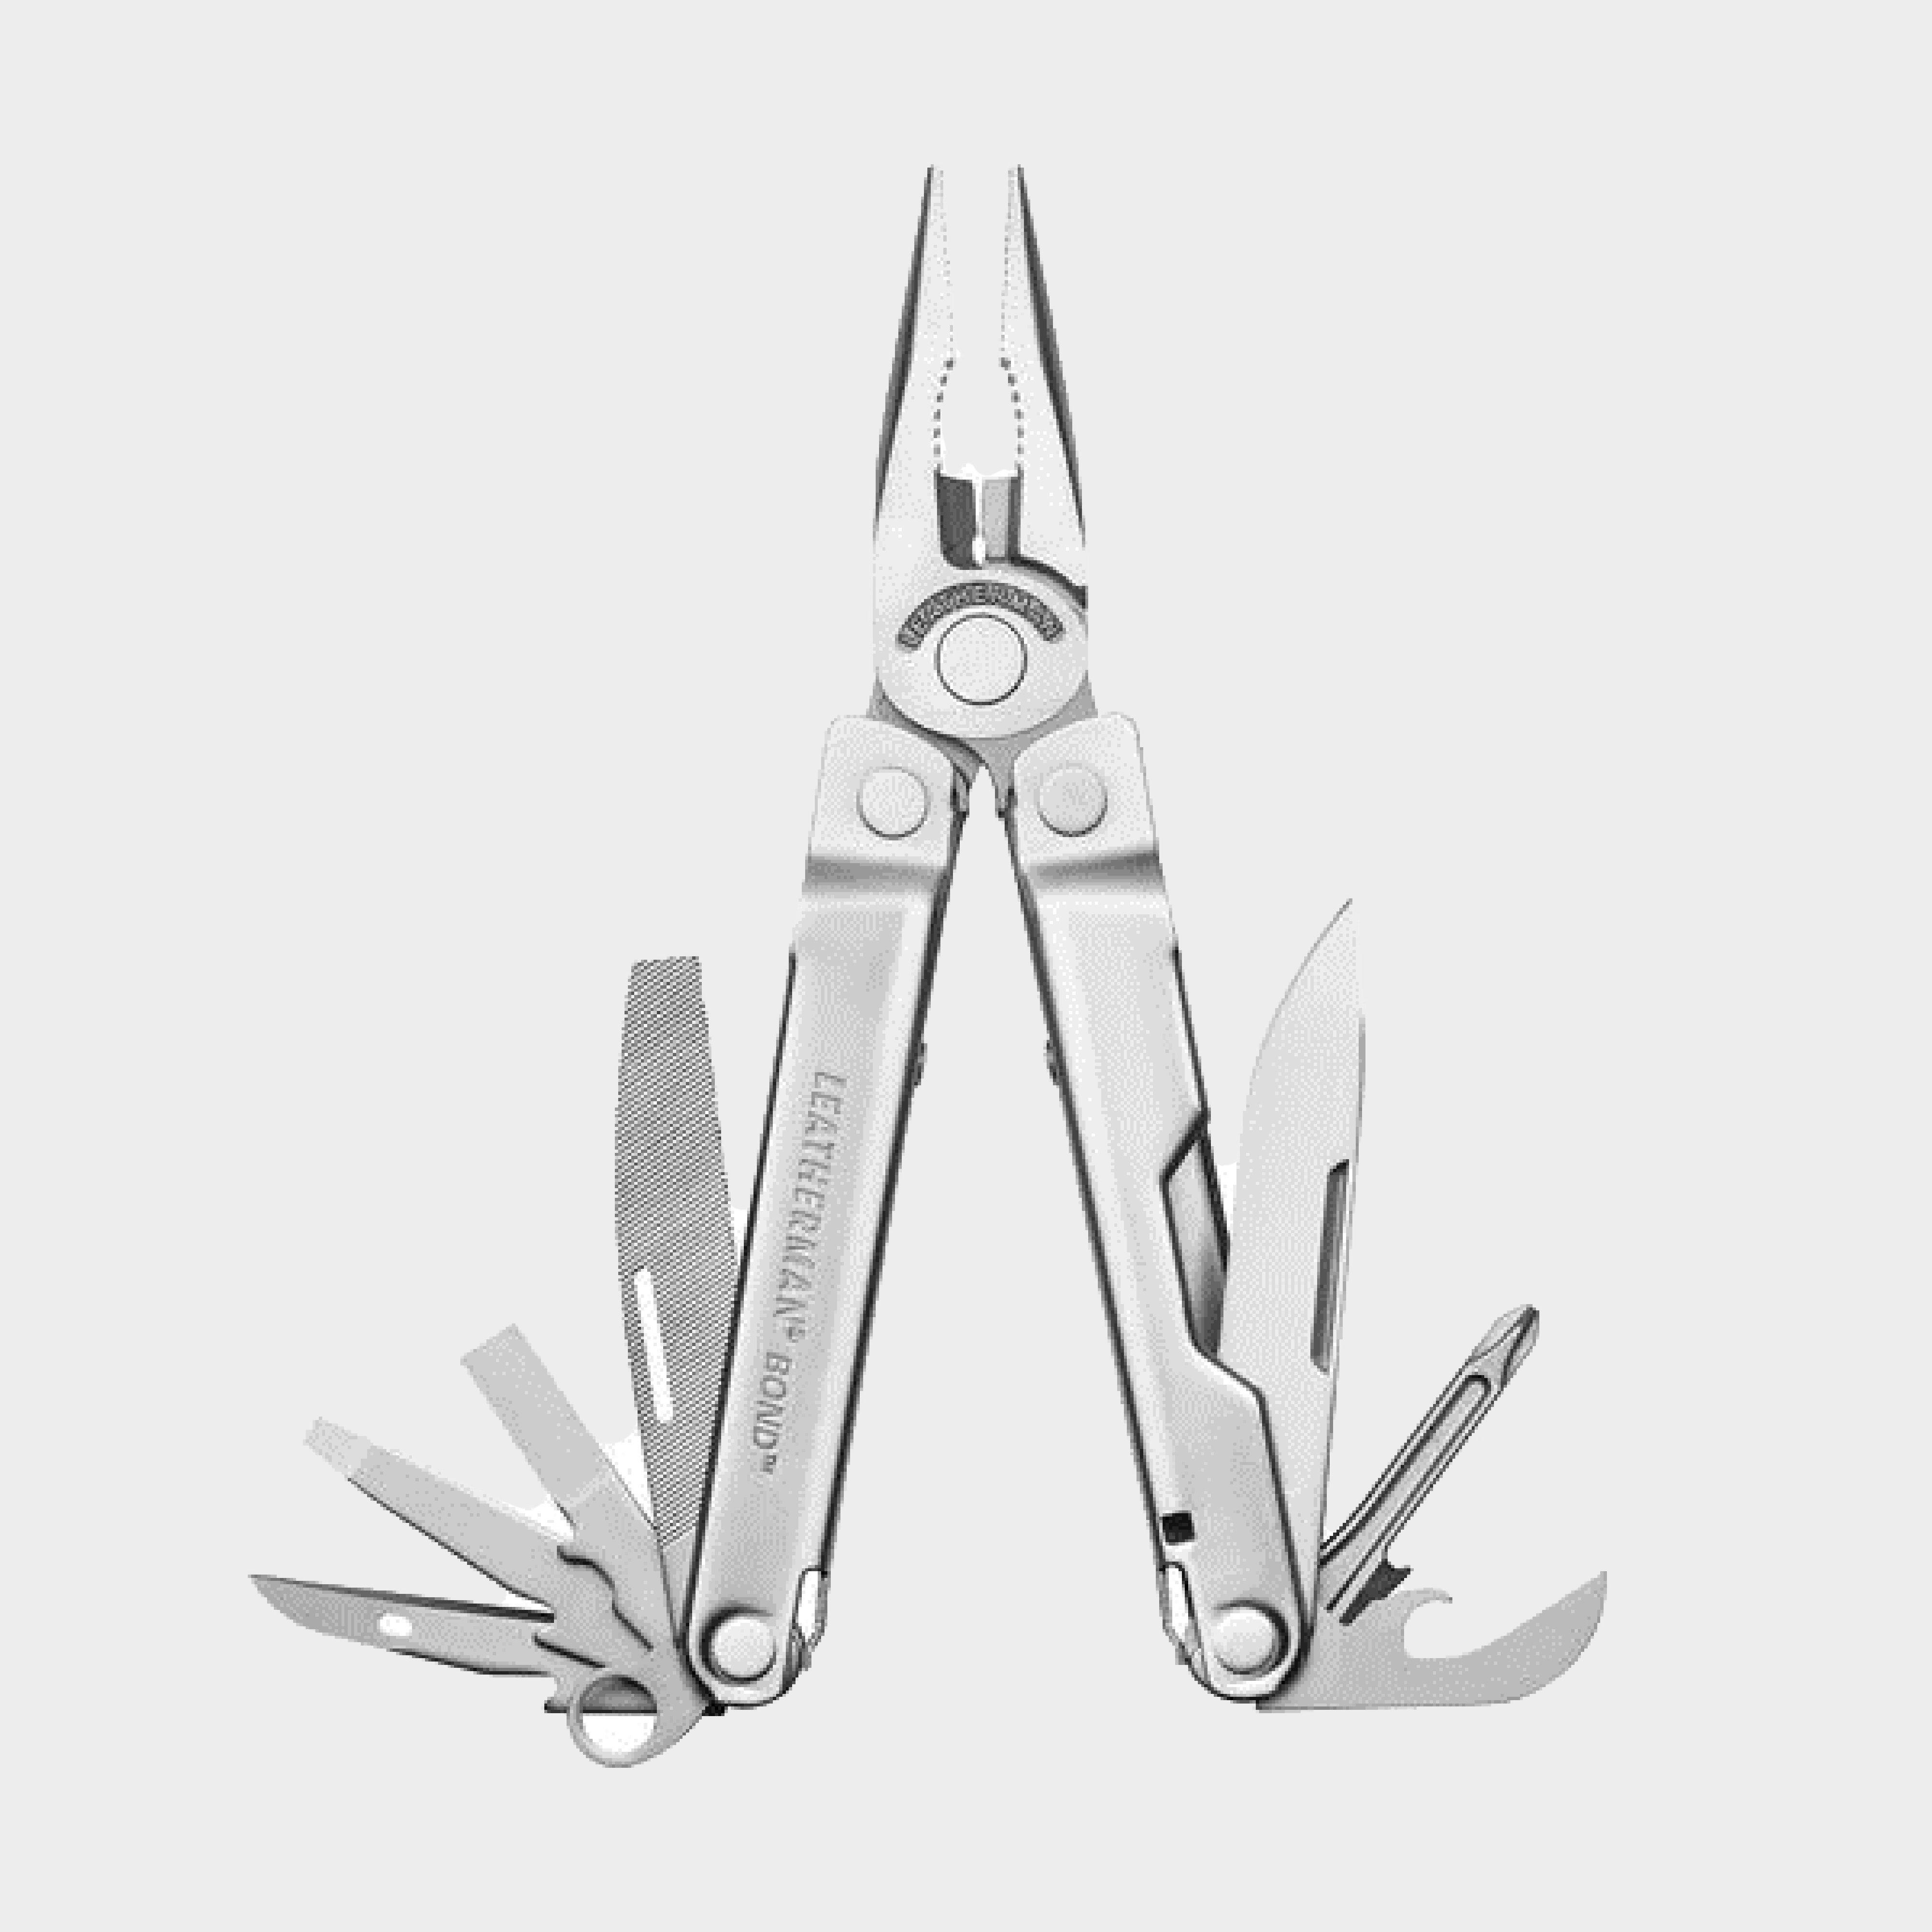 Leatherman Bond Multi-tool - Silver/silver  Silver/silver